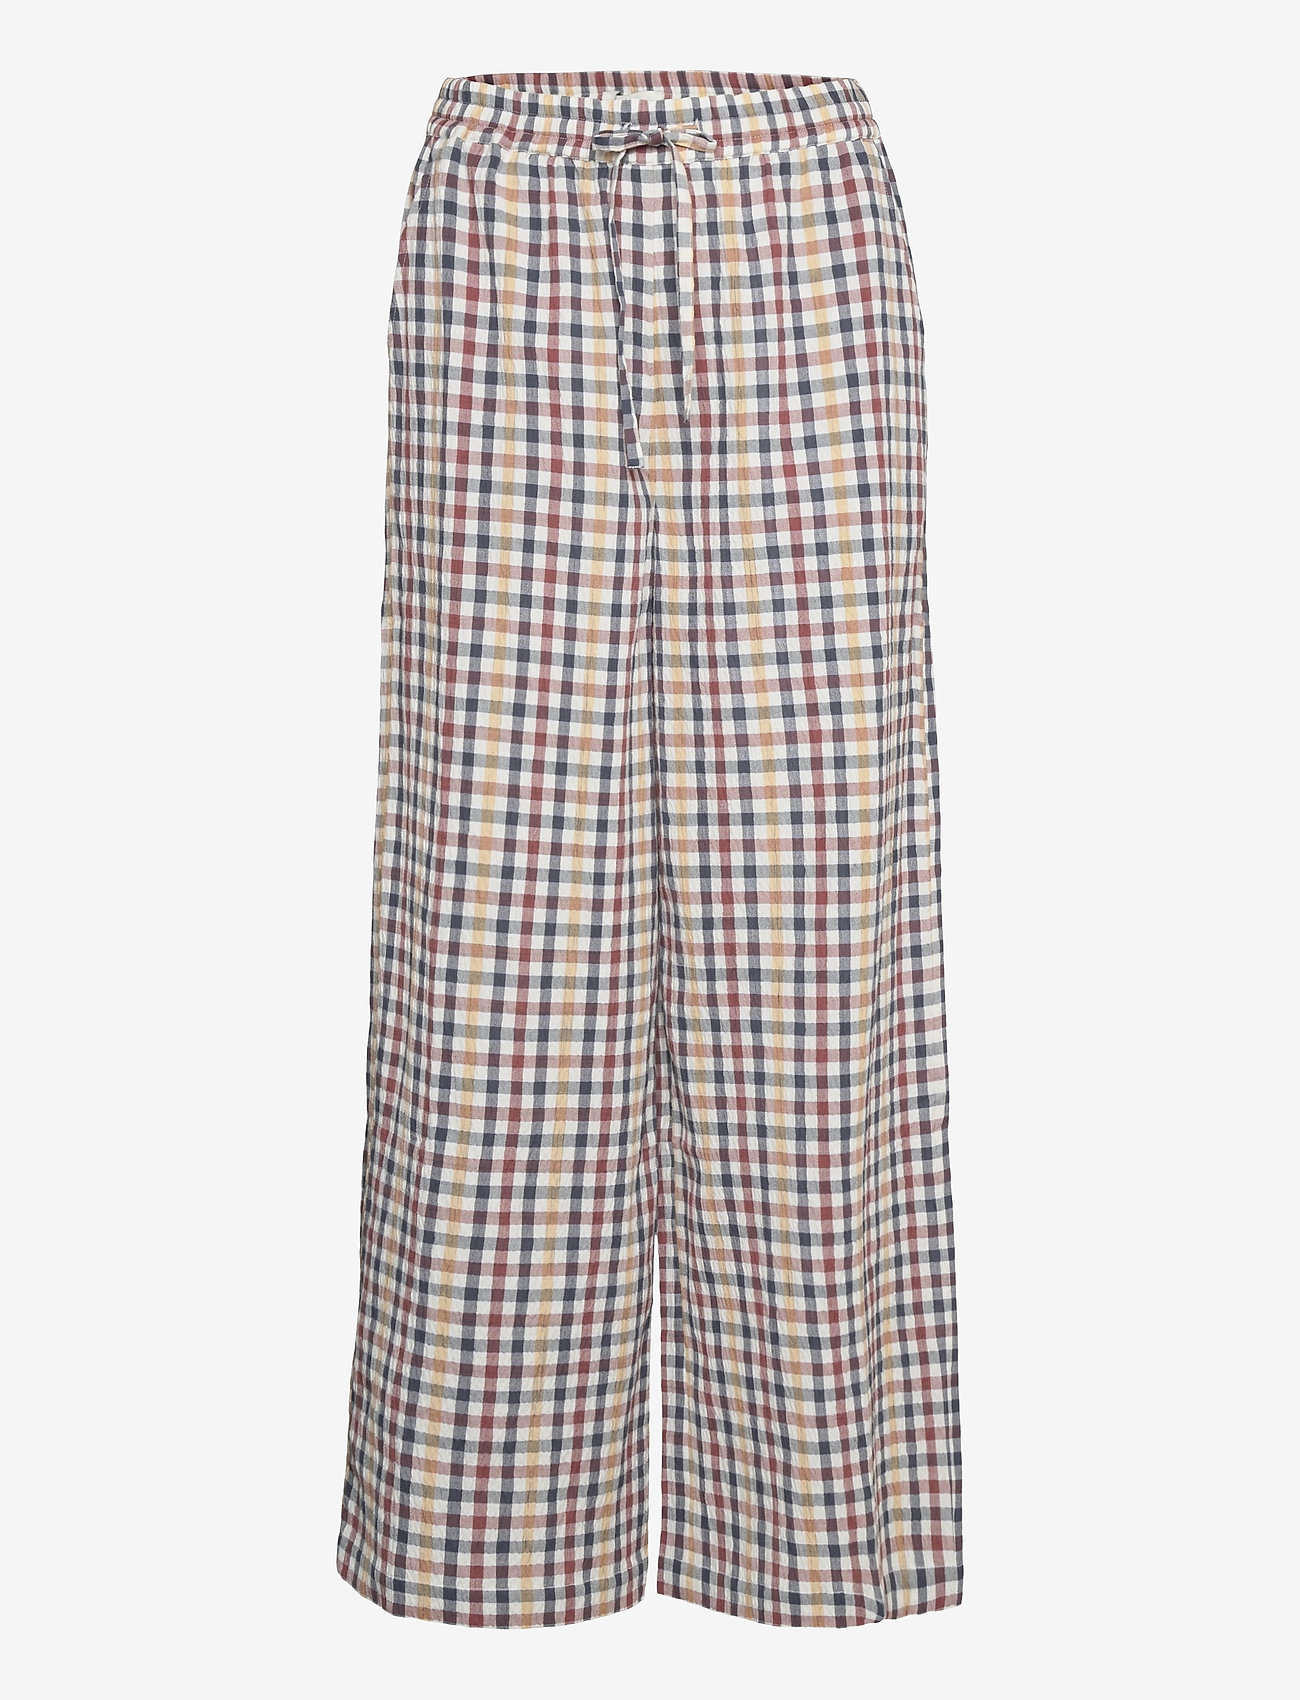 Lollys Laundry - Liam Pants - bukser med brede ben - check print - 0